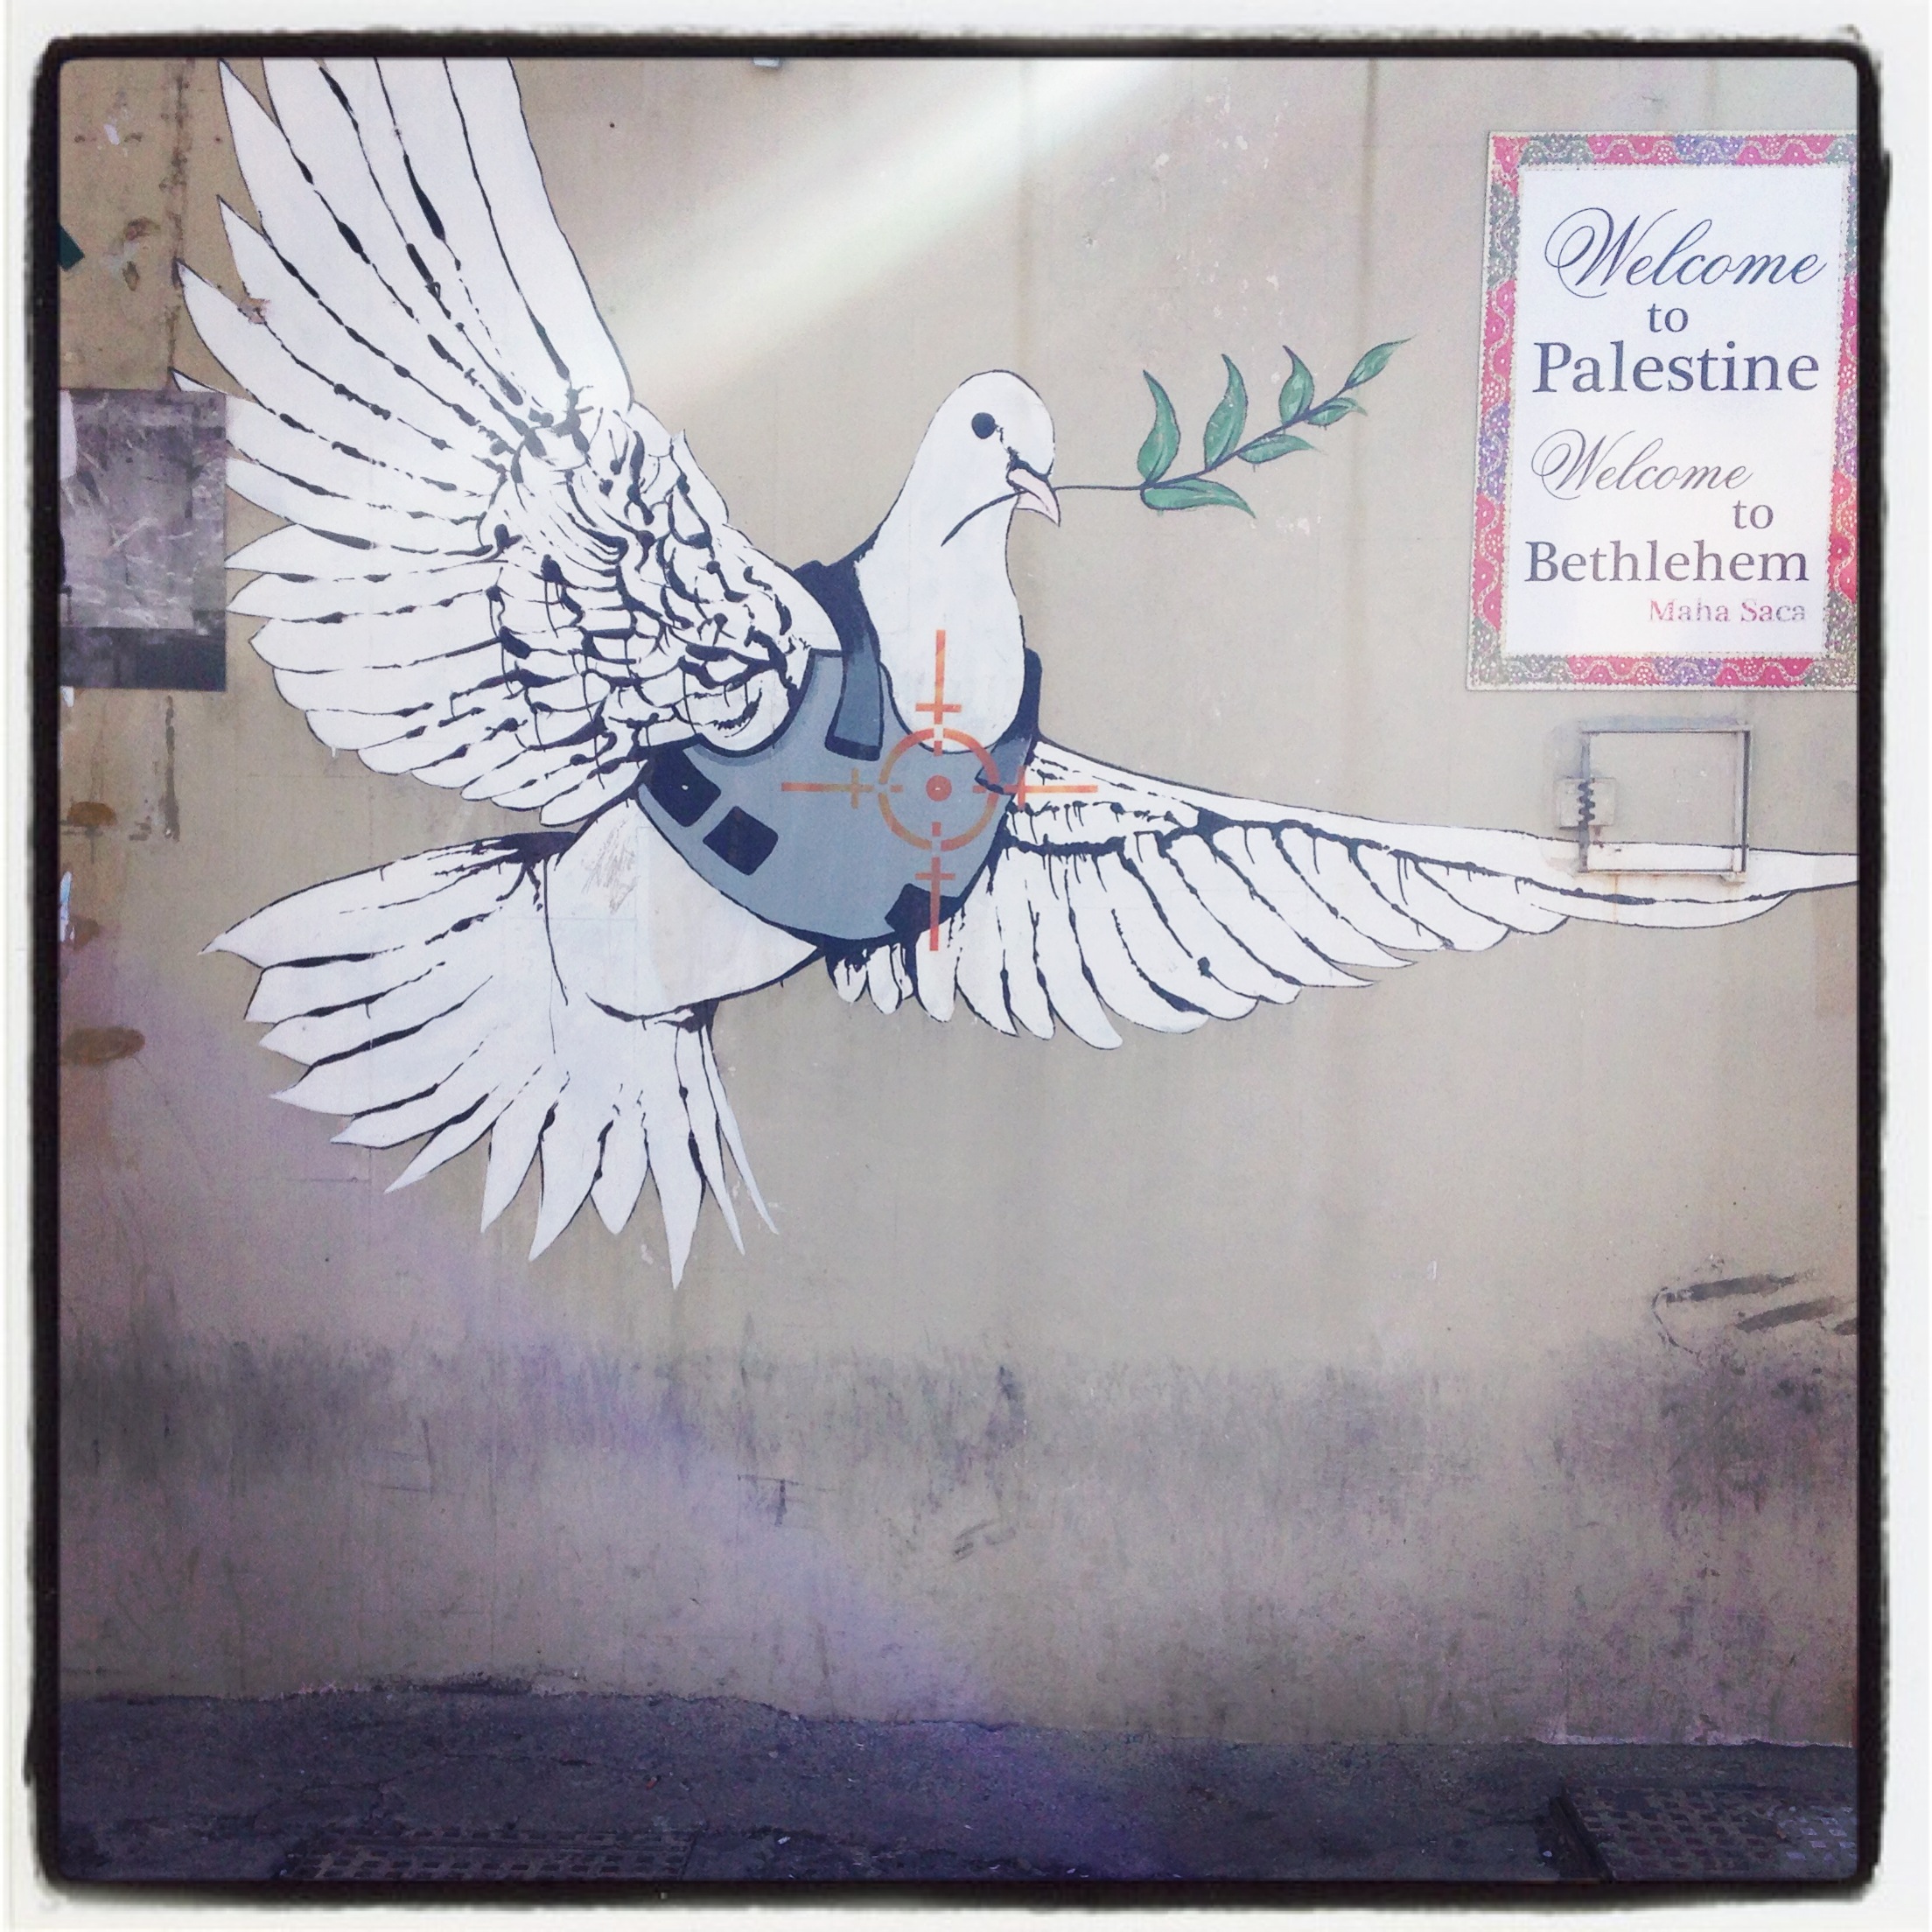 Banksy armored vest peace dove